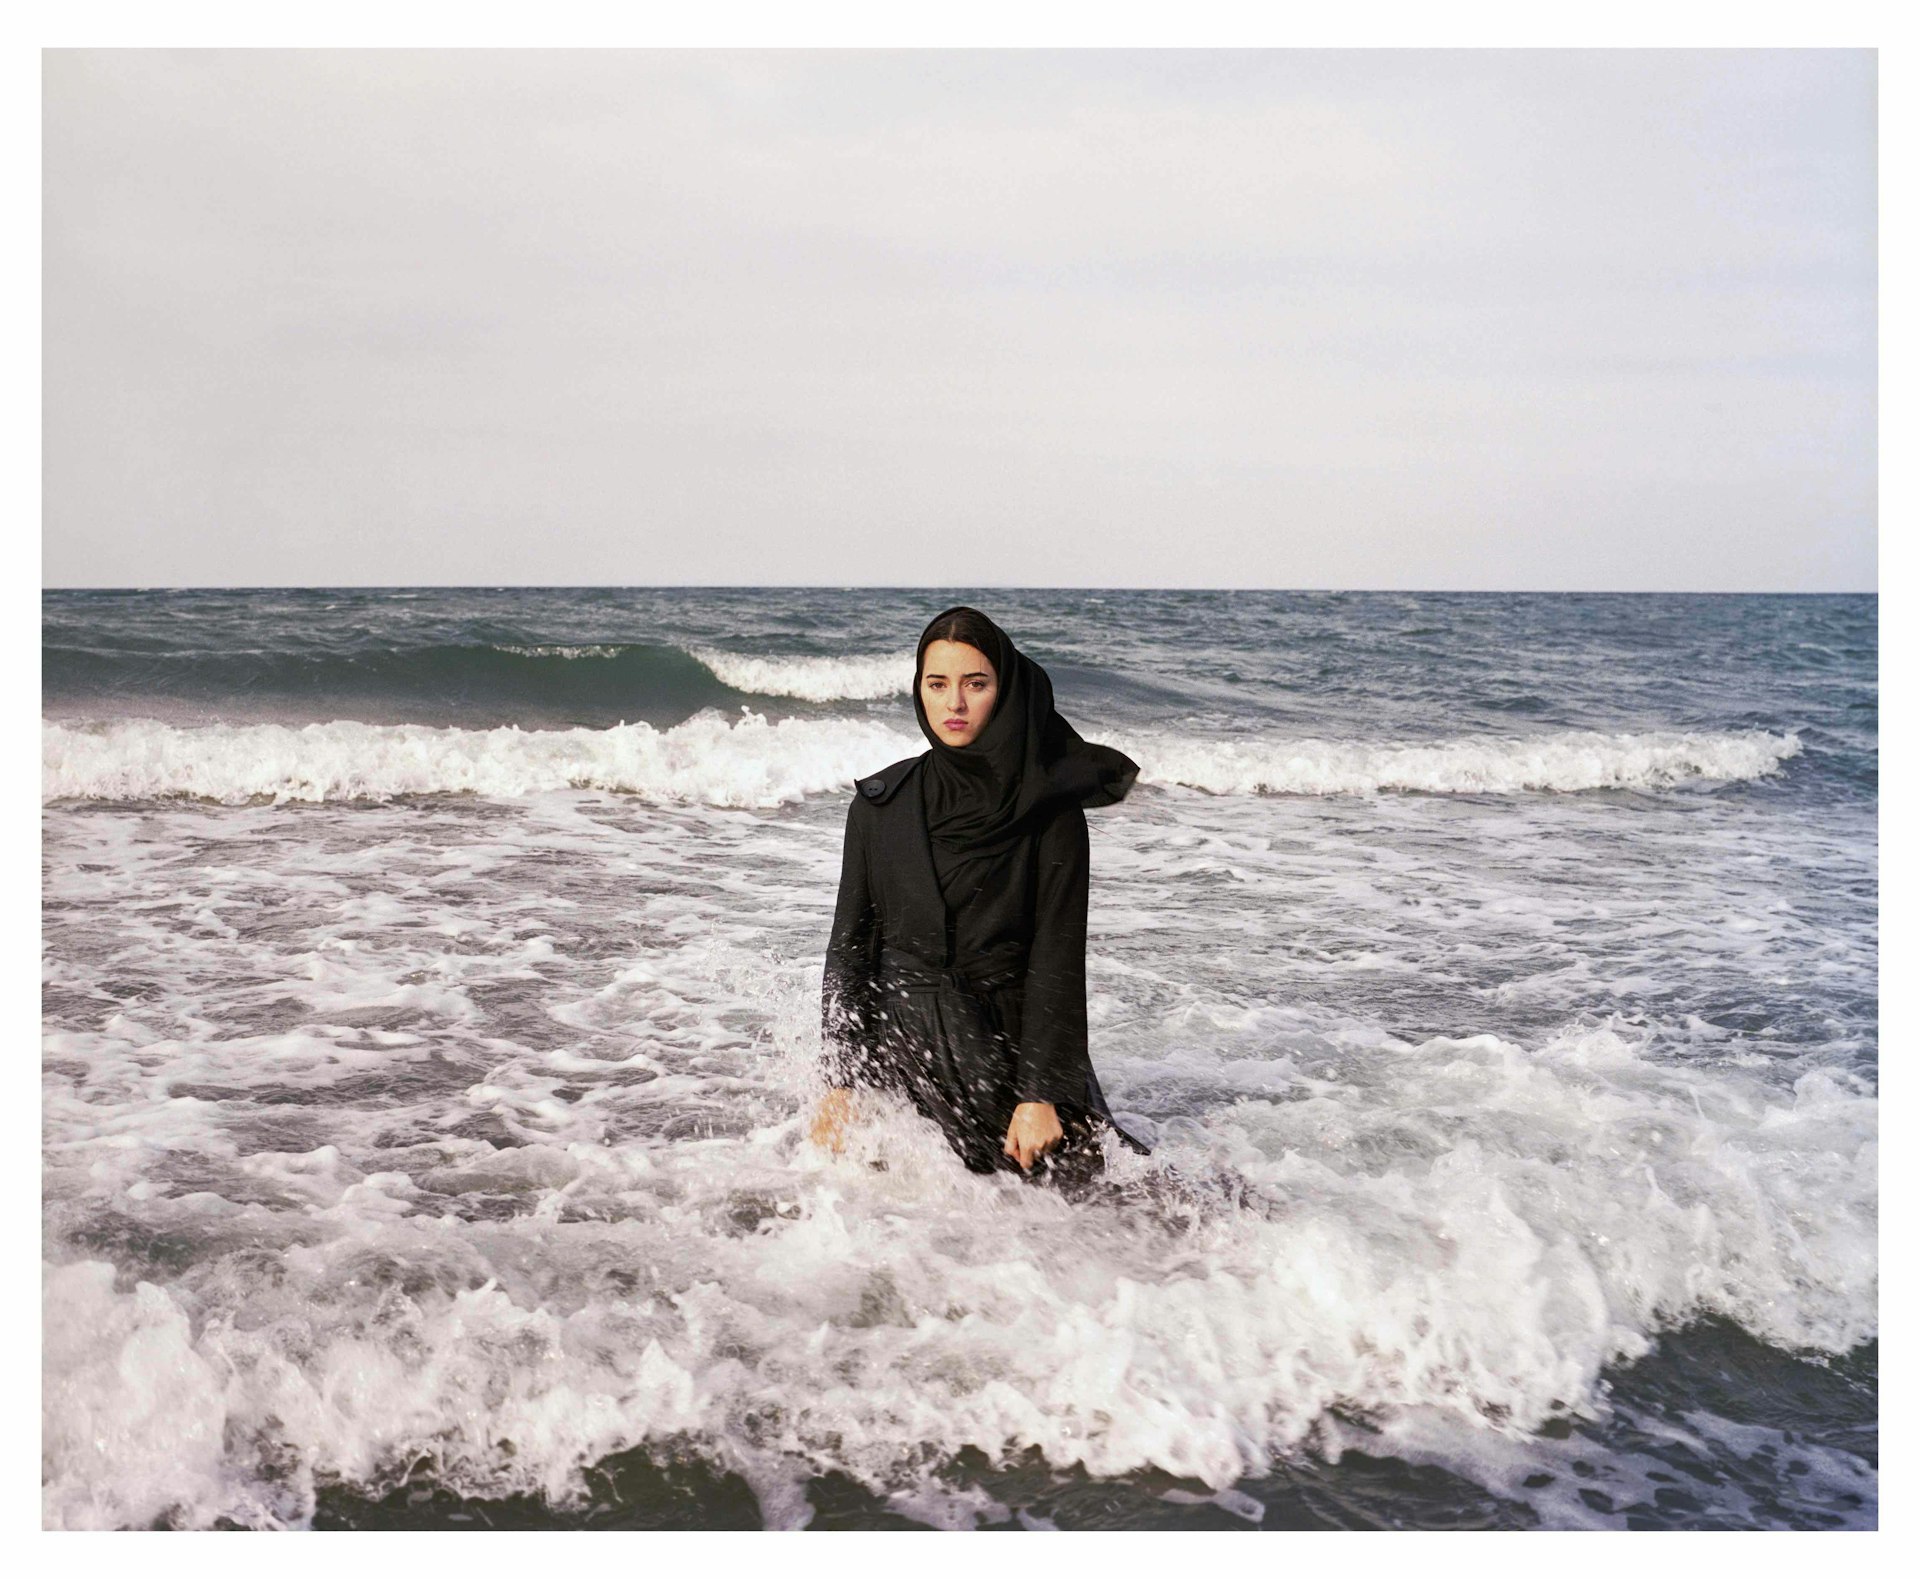 Iran. Mahmoudabad. Caspian Sea. 2011. Imaginary CD cover for Sahar © Newsha Tavakolian / Magnum Photos